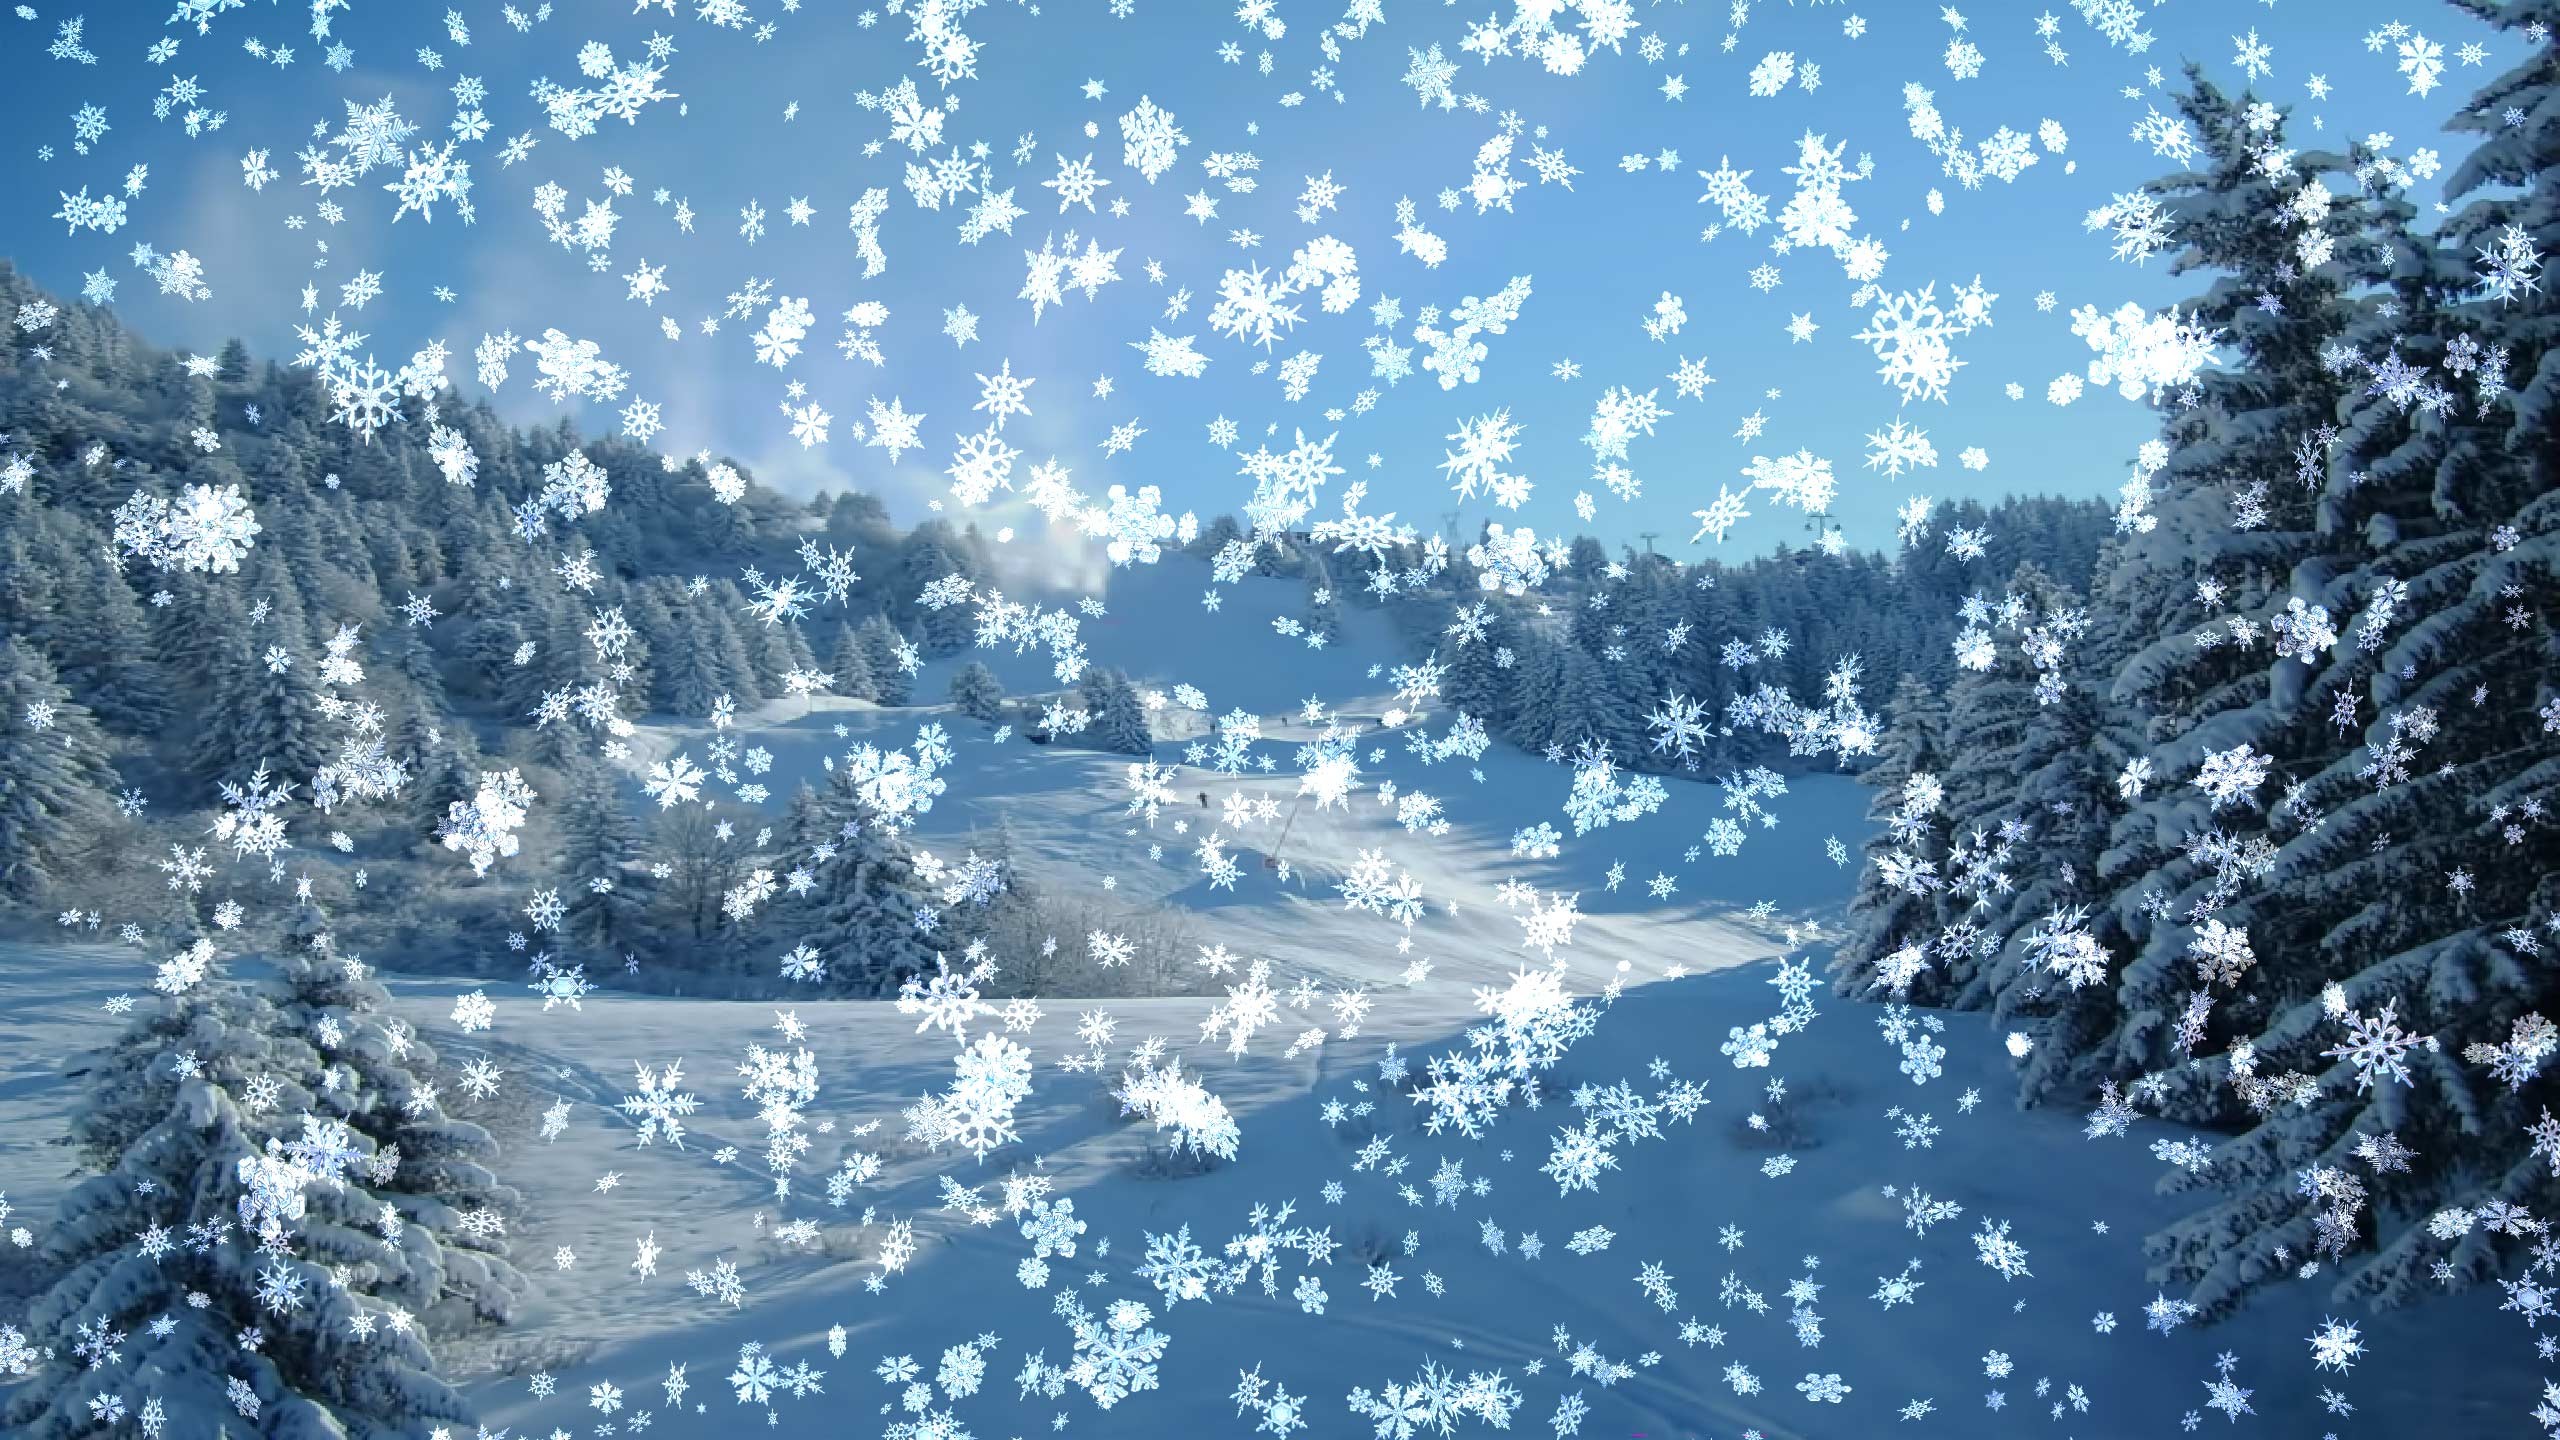 2560x1440 Animated Snow Gif wallpaper - 1391213